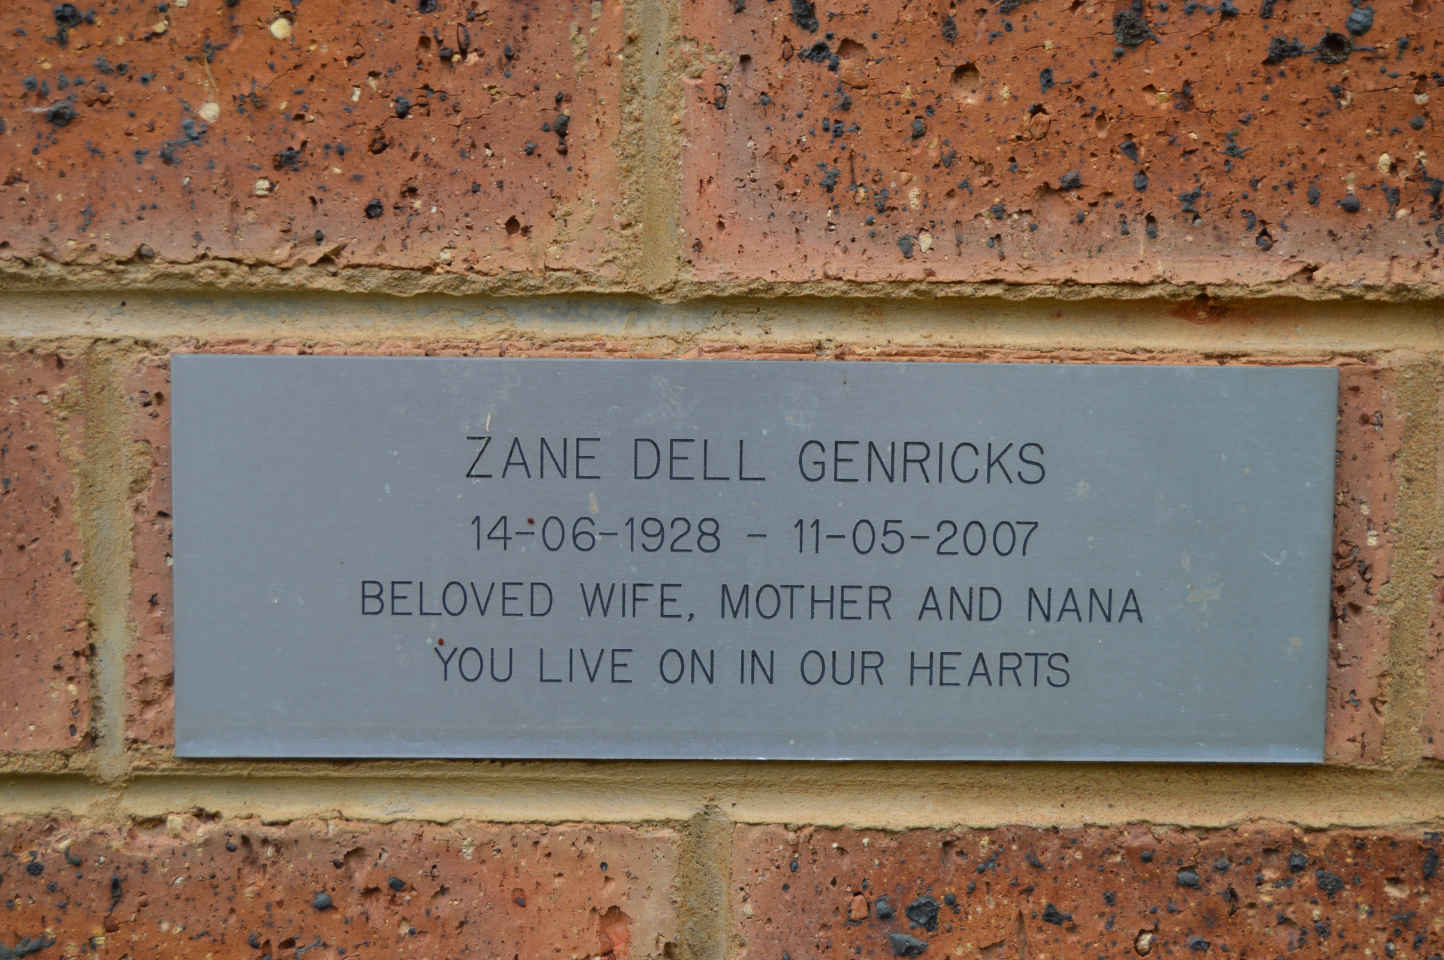 GENRICKS Zane Dell 1928-2007